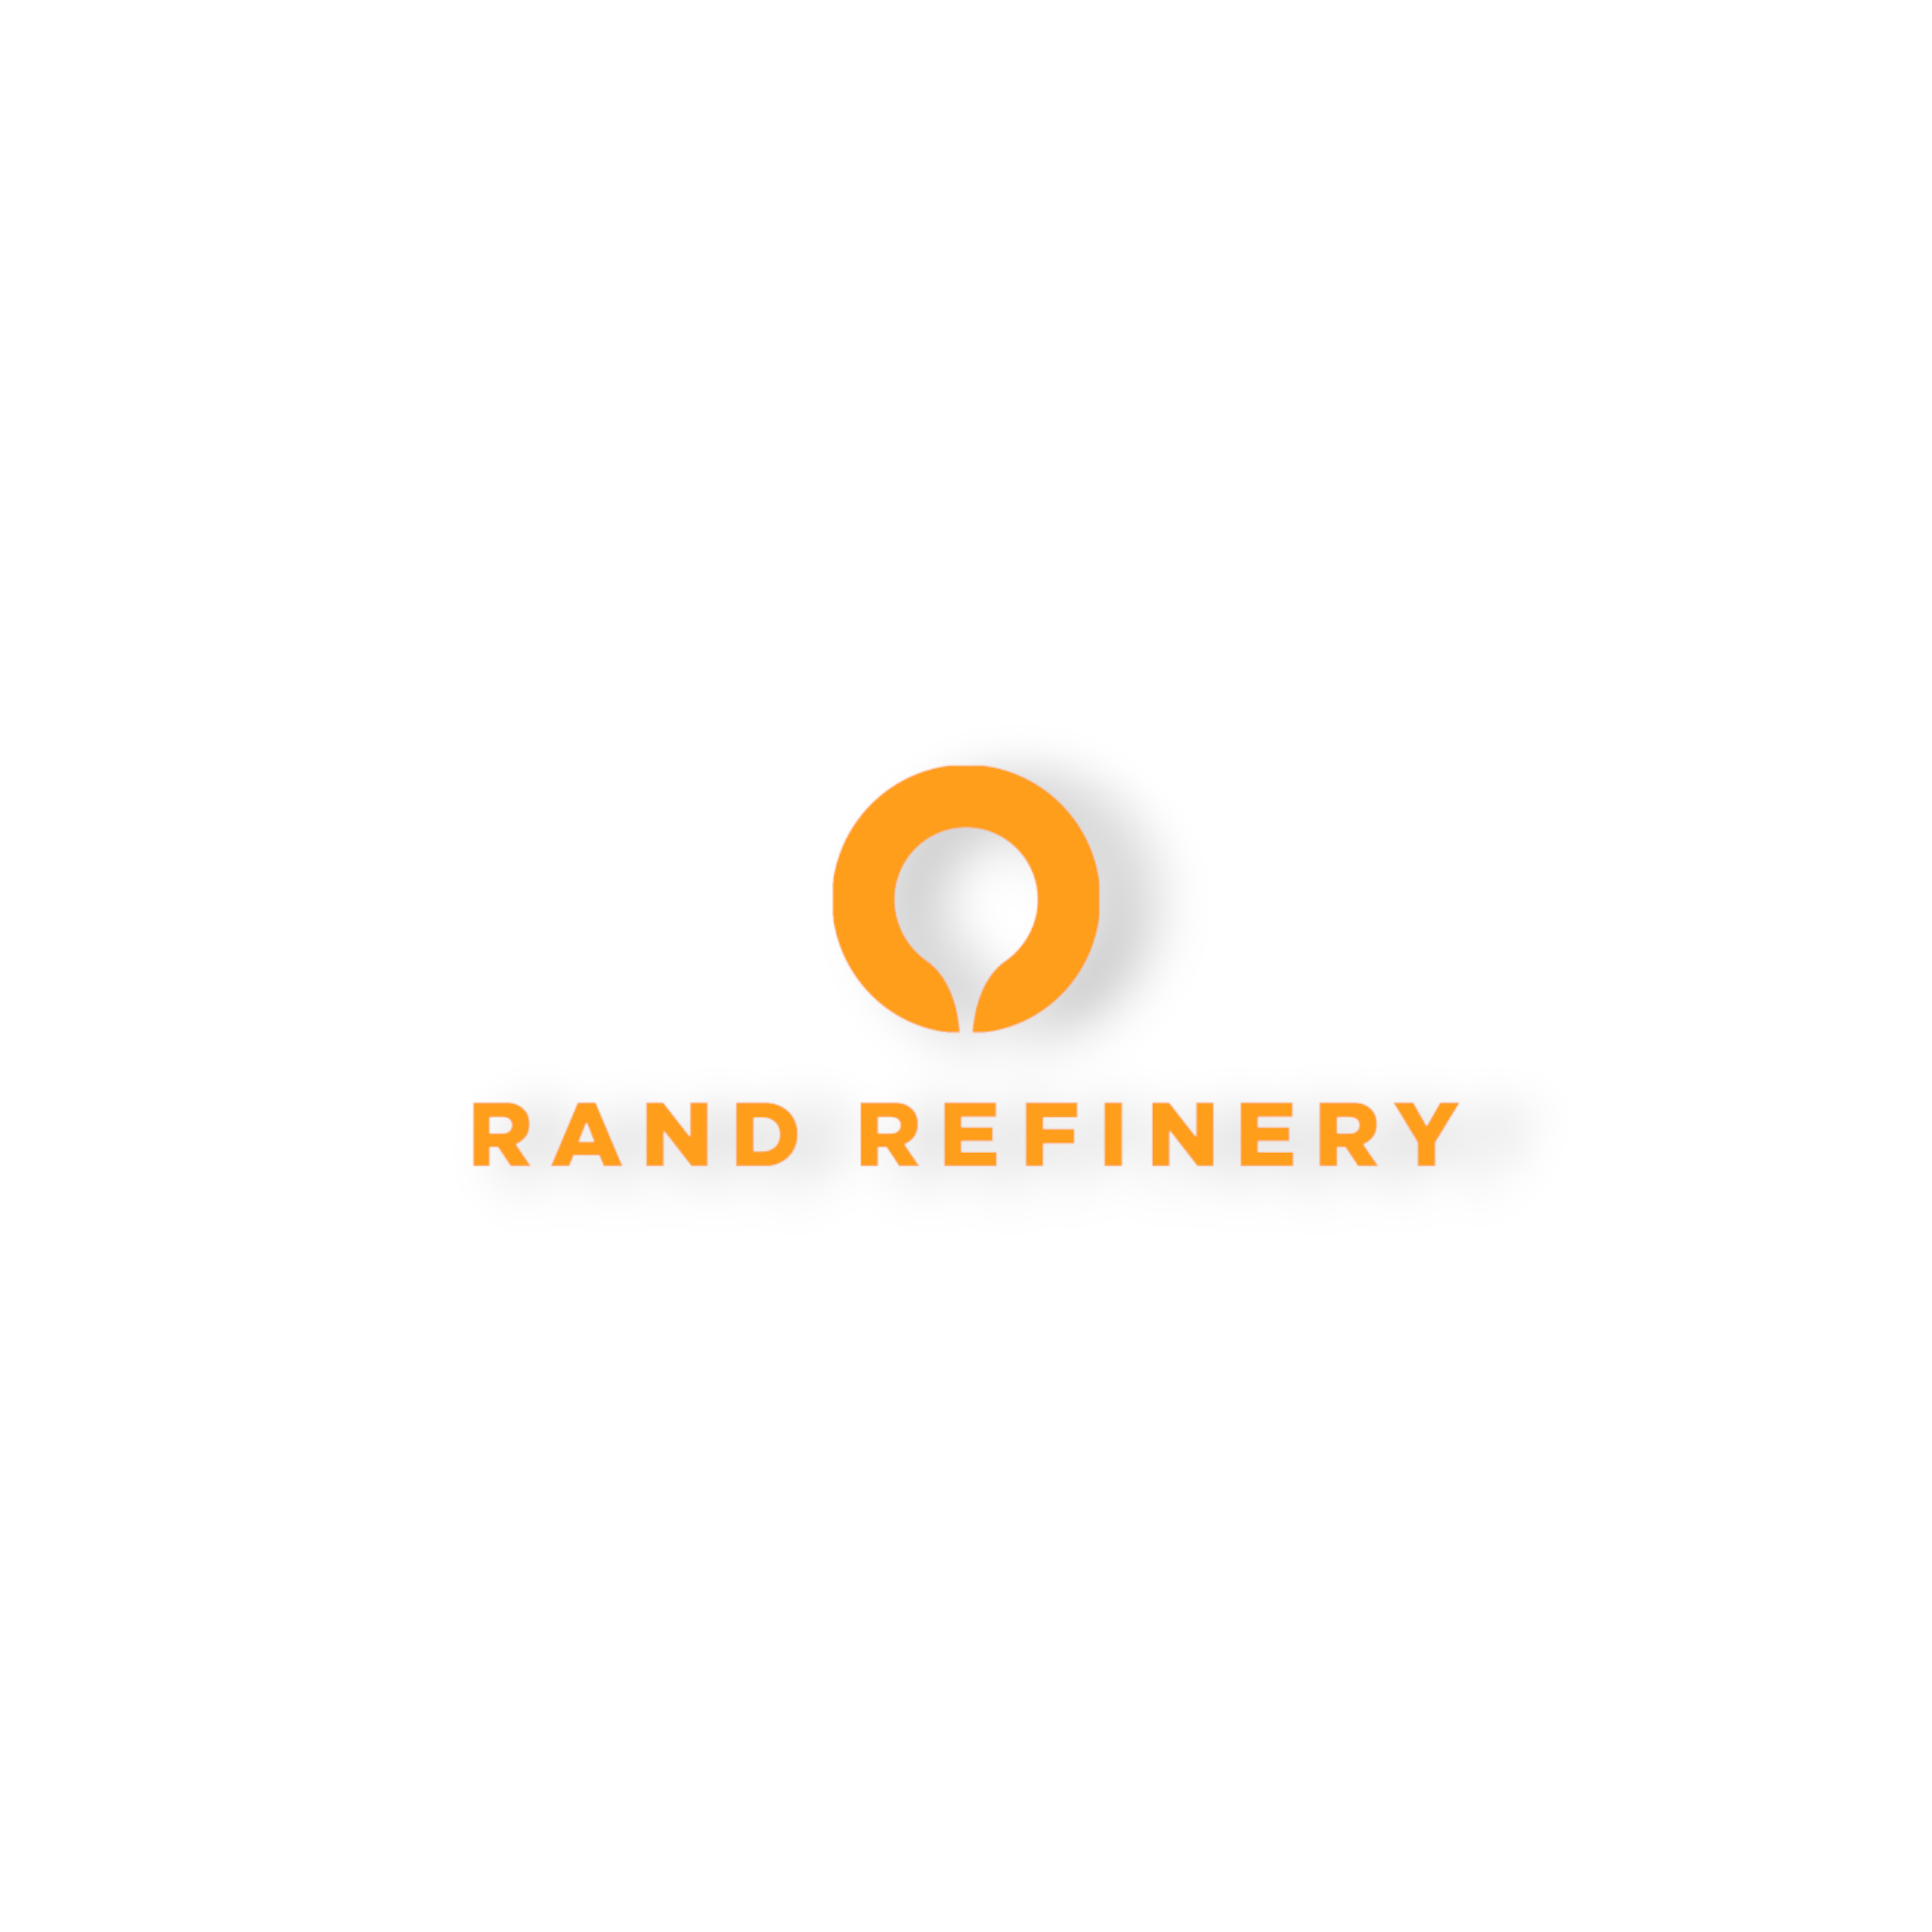 Rand Refinery Logo